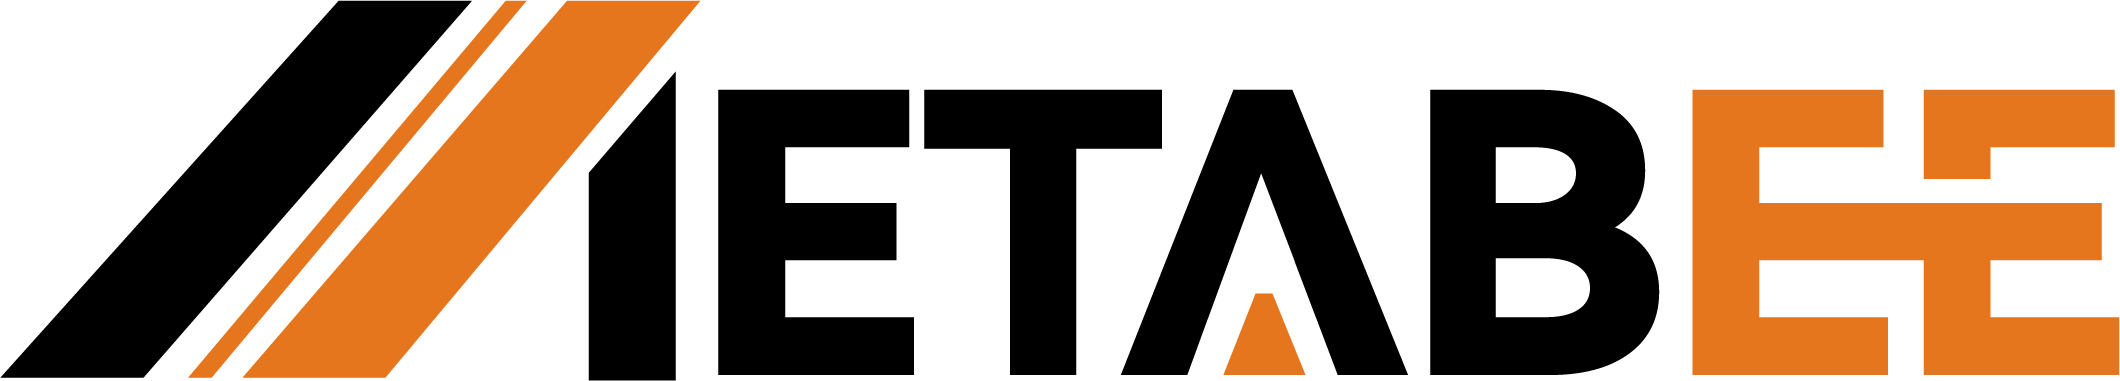 metabee logo